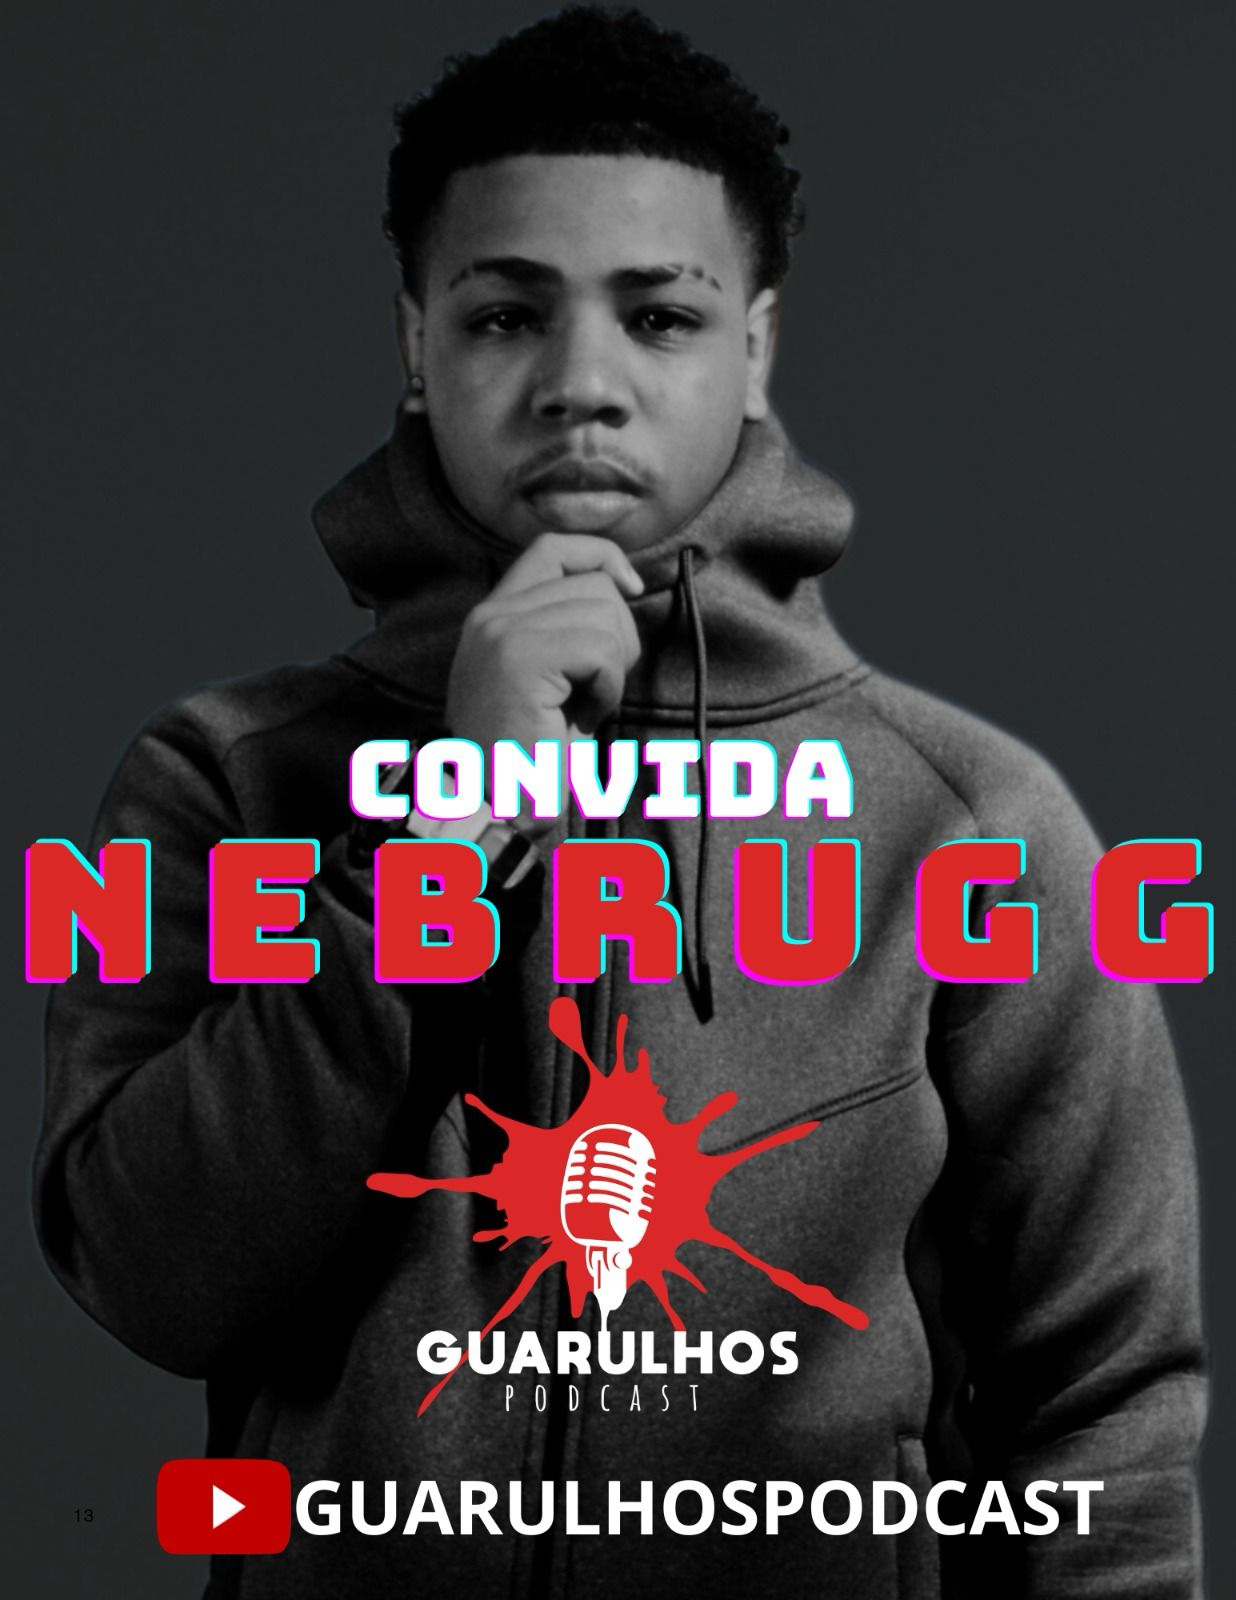 NEBRUGG, jovem promessa do Drill Br, participa Guarulhos Podcast